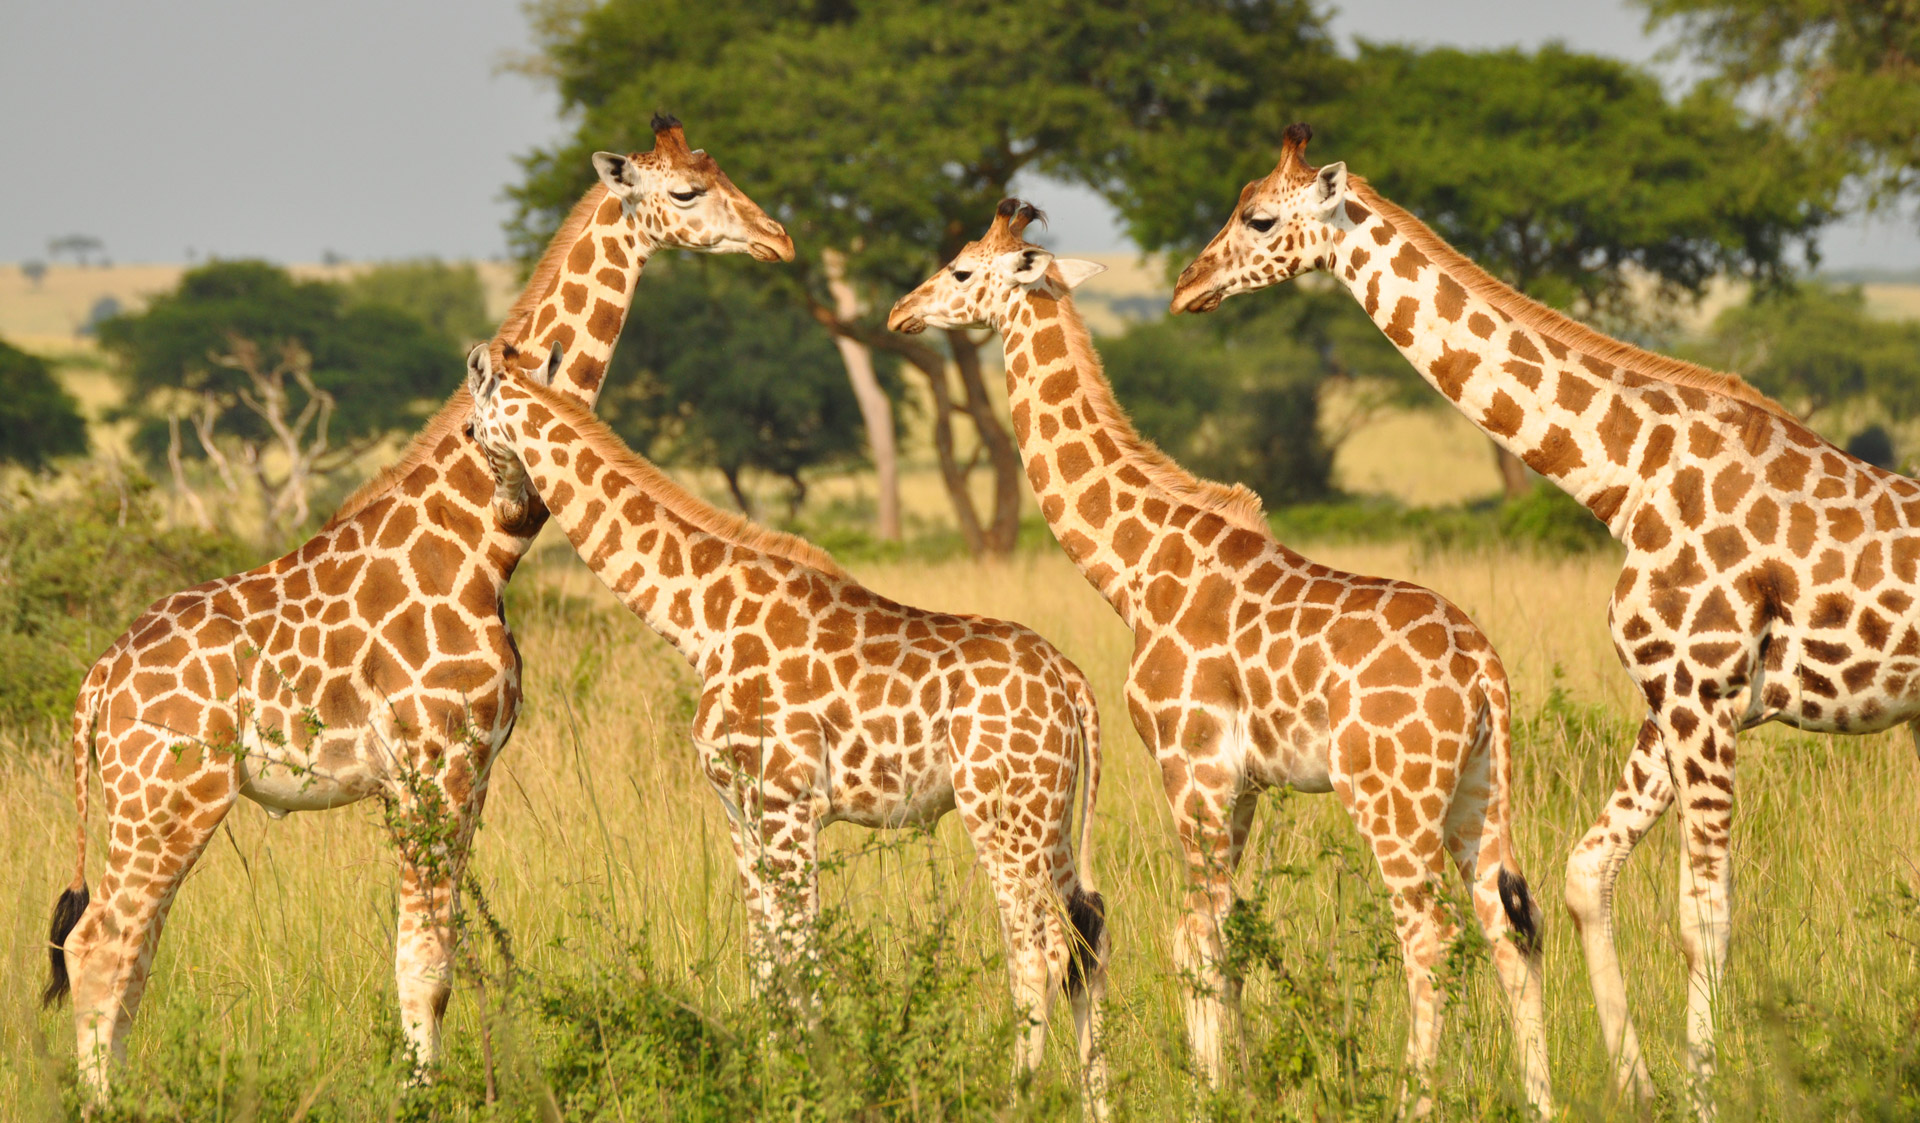 Nubian giraffe herd in Murchison Falls National Park, Uganda